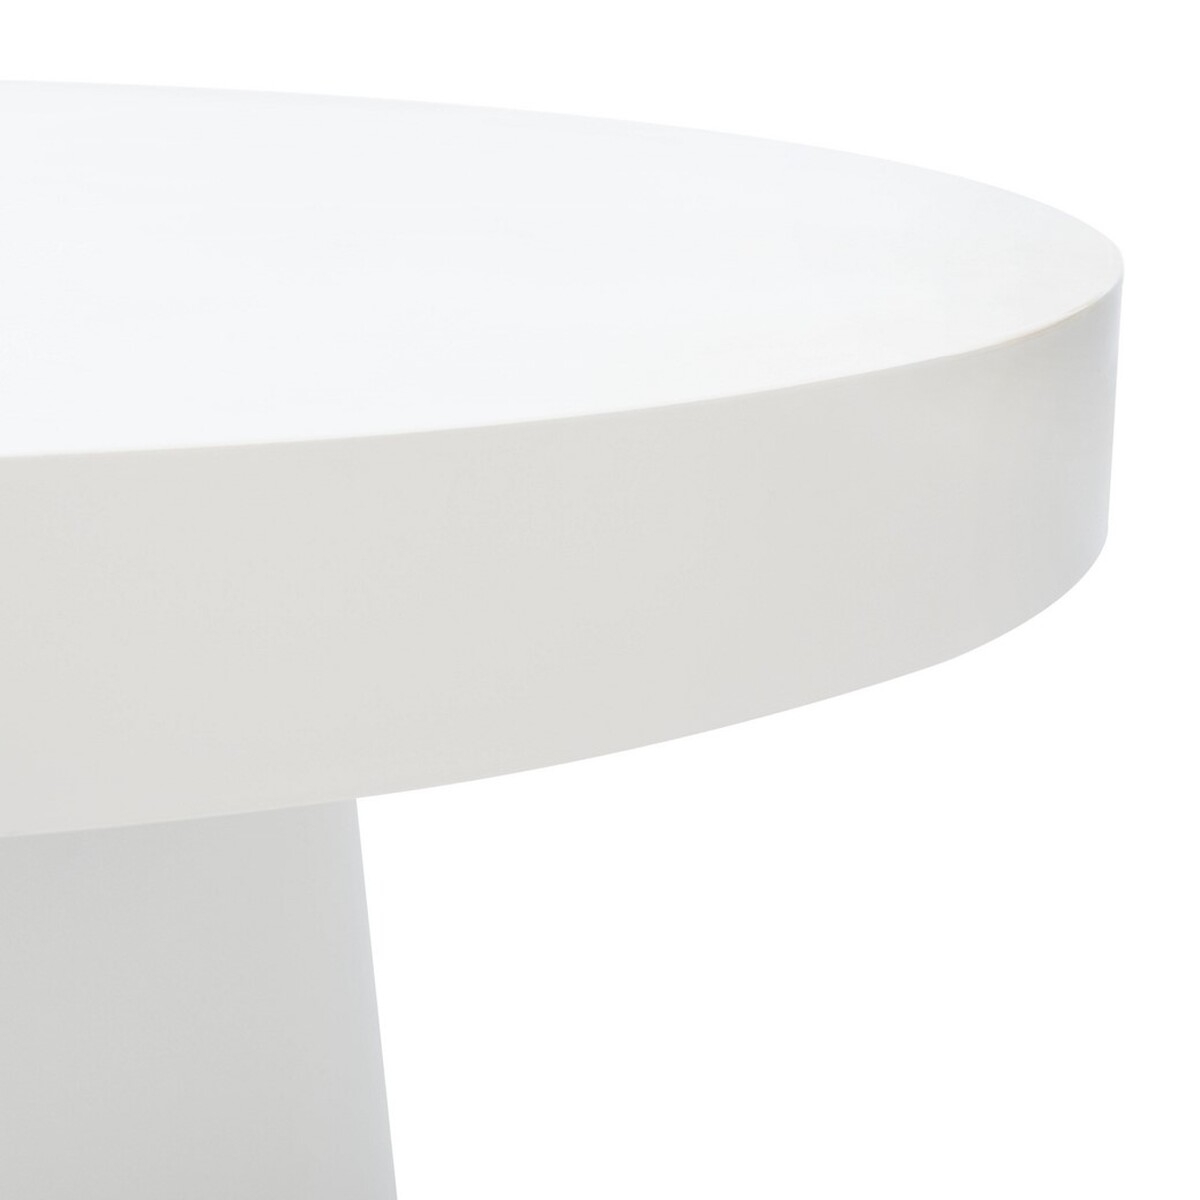 Jaria Paper Mache Coffee Table, White - Image 2